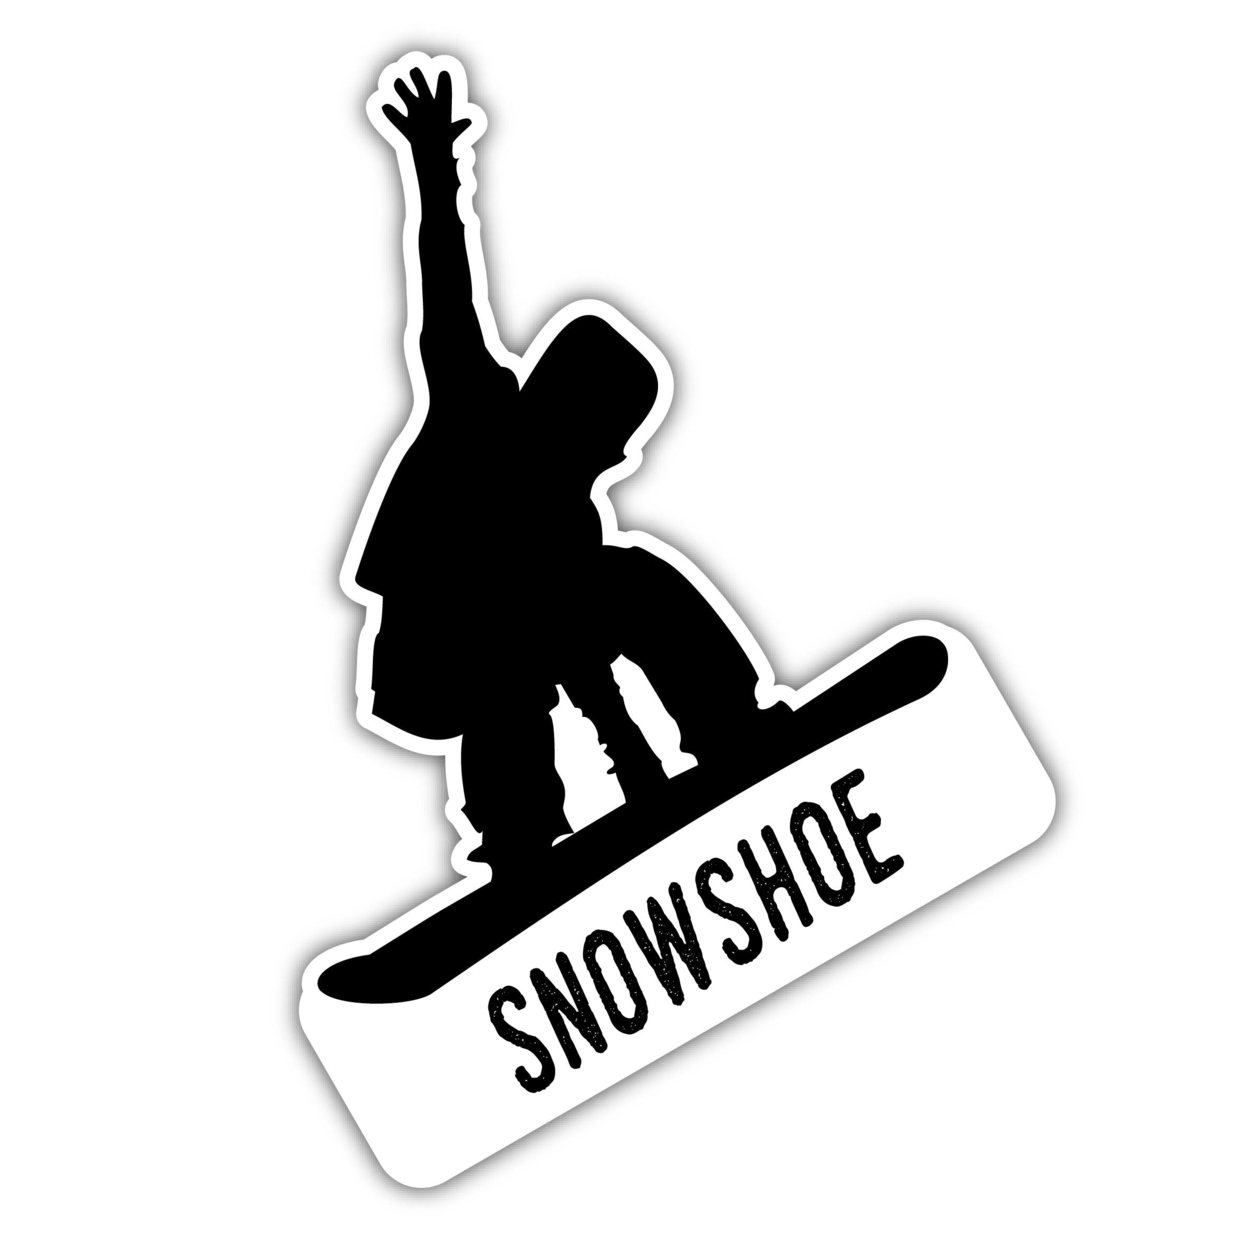 Snowshoe West Virginia Ski Adventures Souvenir 4 Inch Vinyl Decal Sticker Board Design